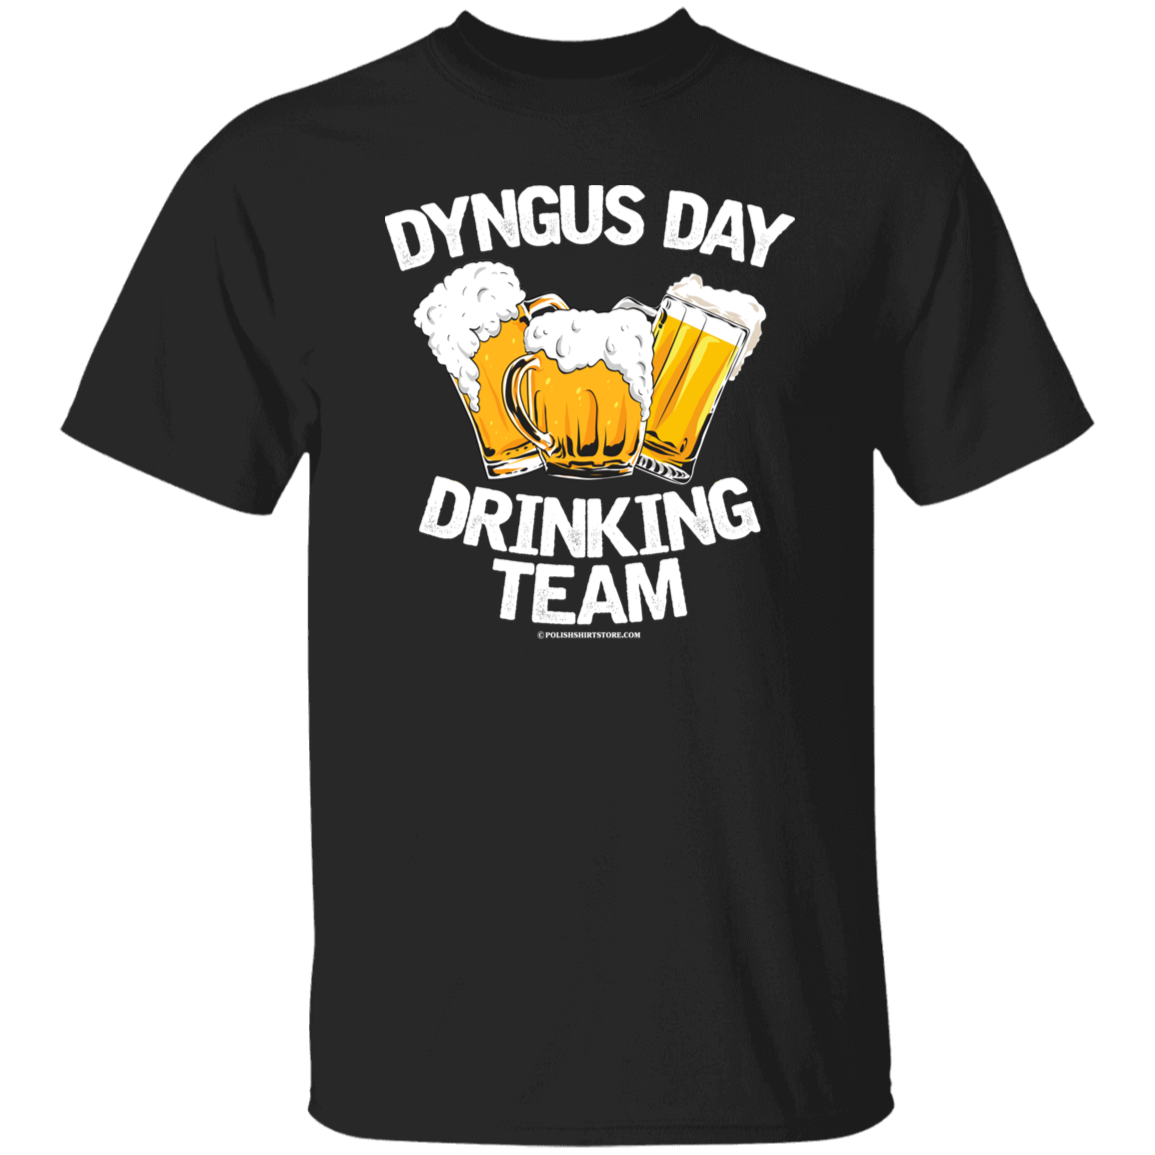 Dyngus Day Drinking Team Apparel CustomCat G500 5.3 oz. T-Shirt Black S